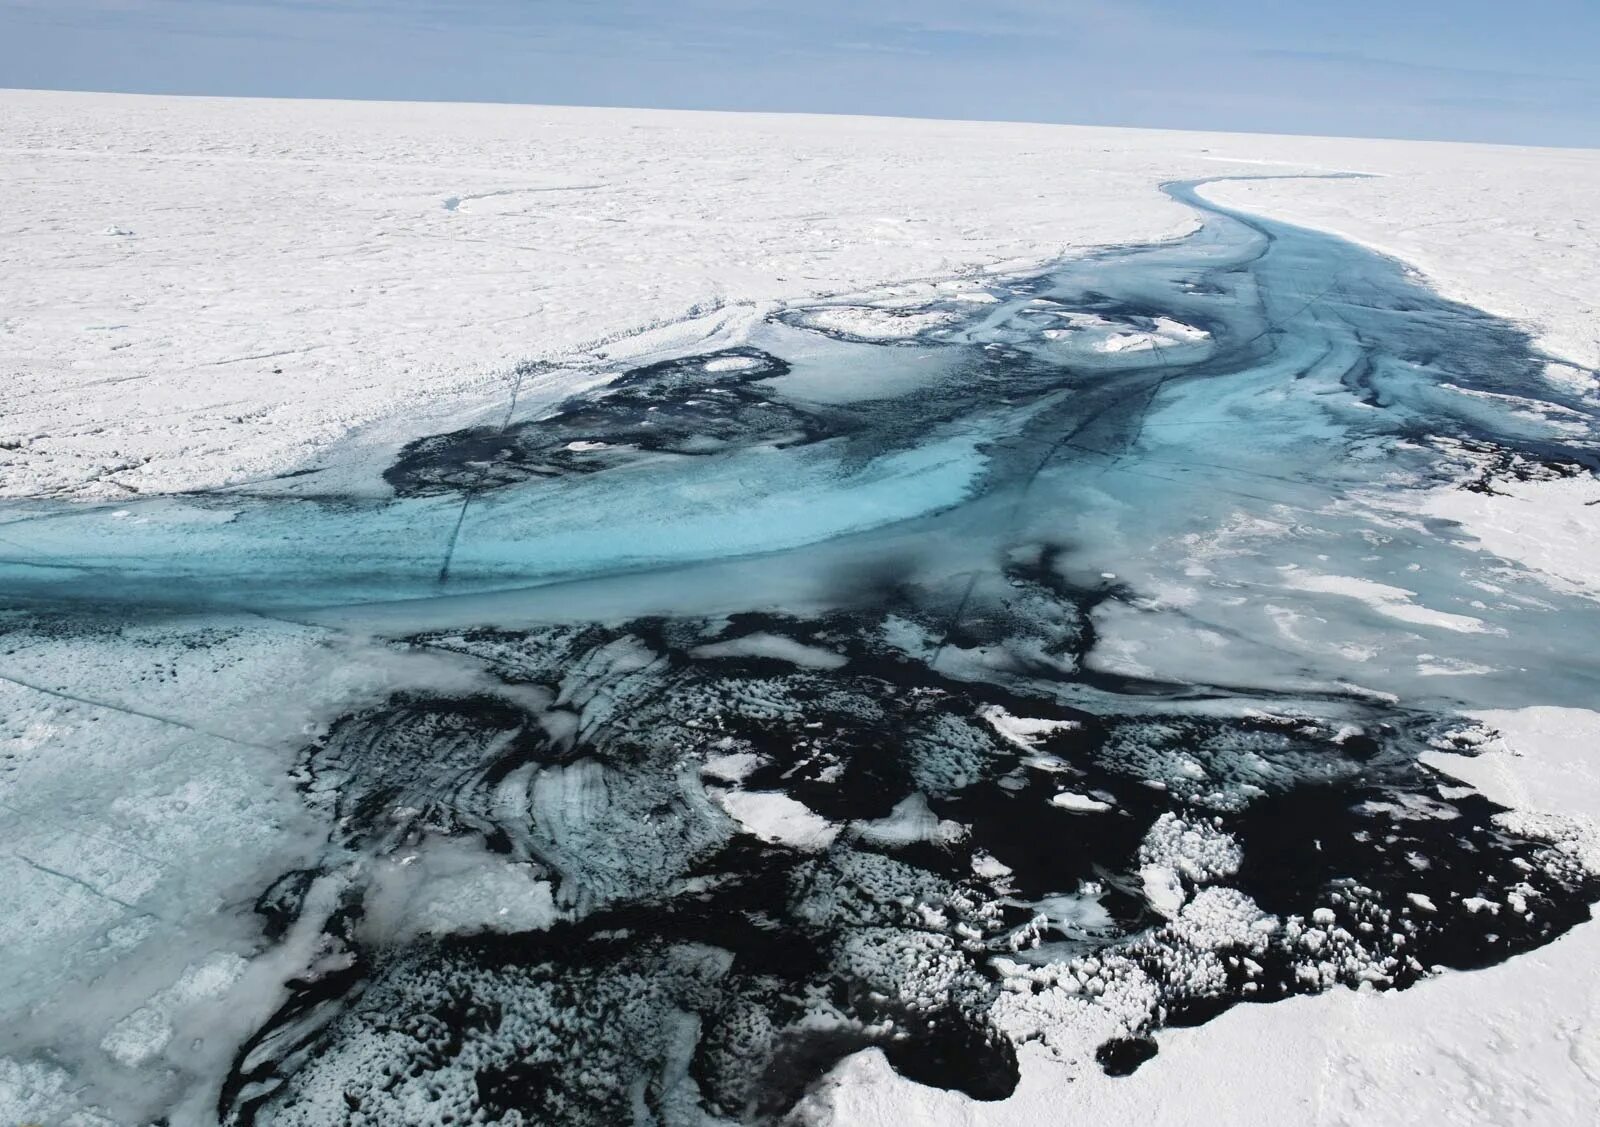 Разлив нефти в Северном Ледовитом океане. Загрязнение Северного Ледовитого океана. Разлив нефти в Арктике. Нефтяные пятна в Арктике. Изменение ледовитого океана